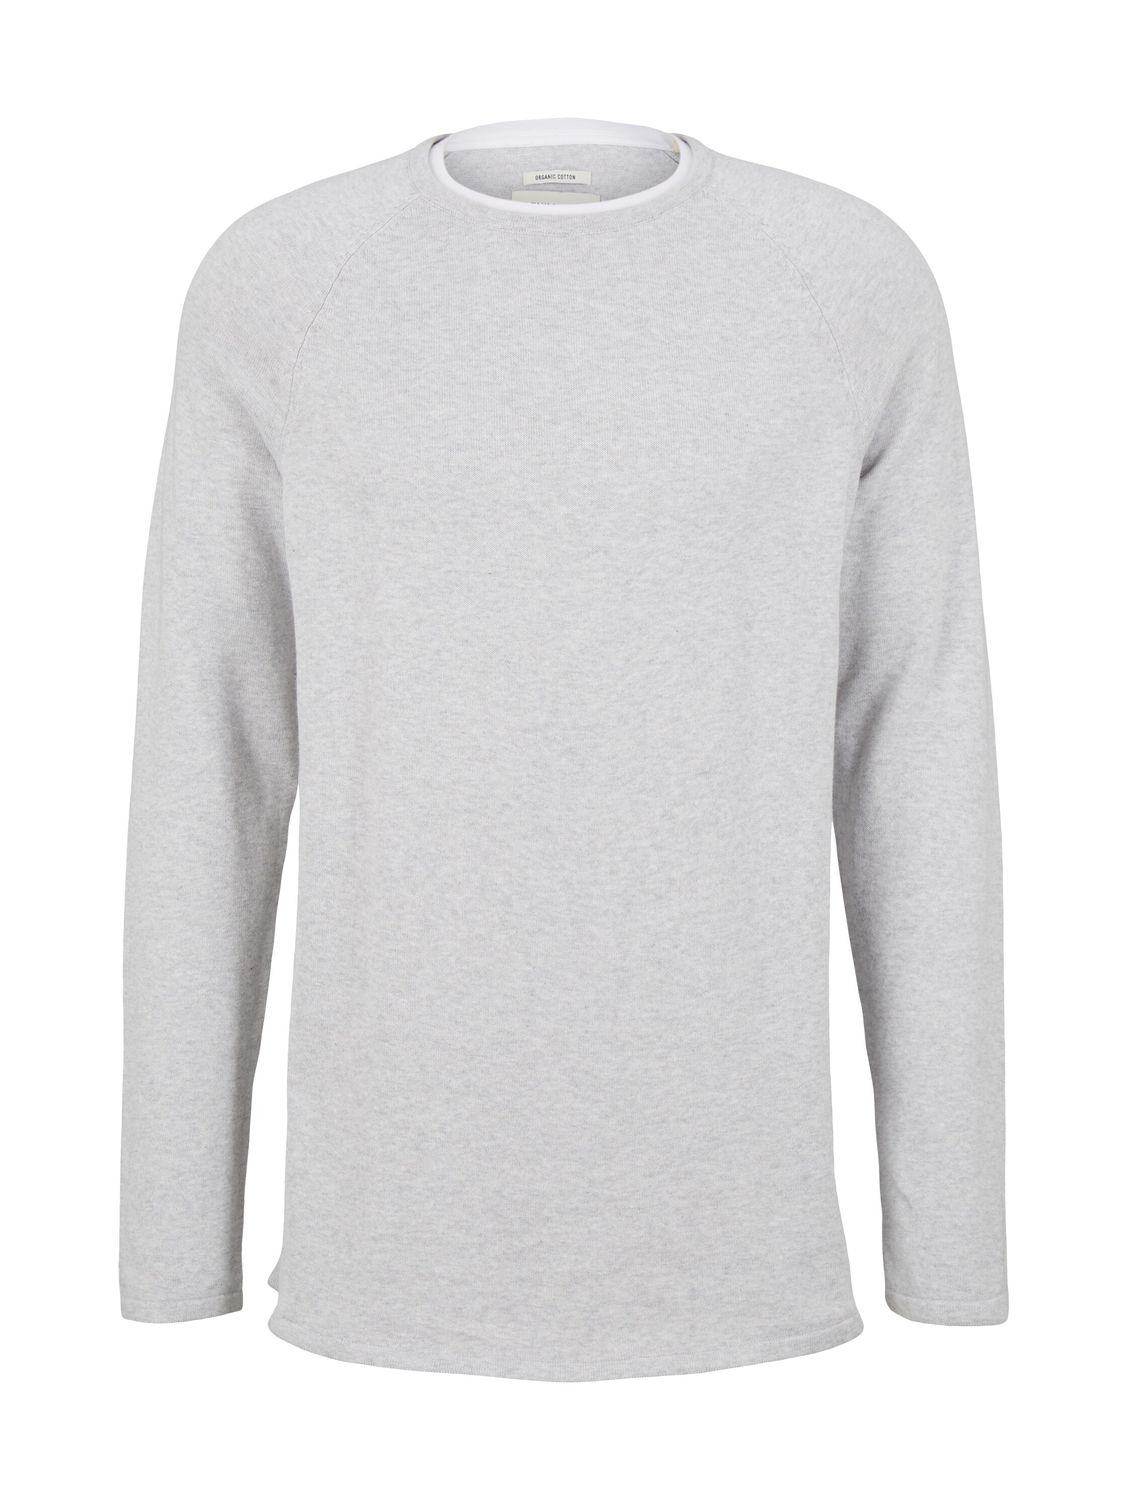 Пуловер TOM TAILOR Denim BASIC, серый толстовка tom tailor размер xs серый